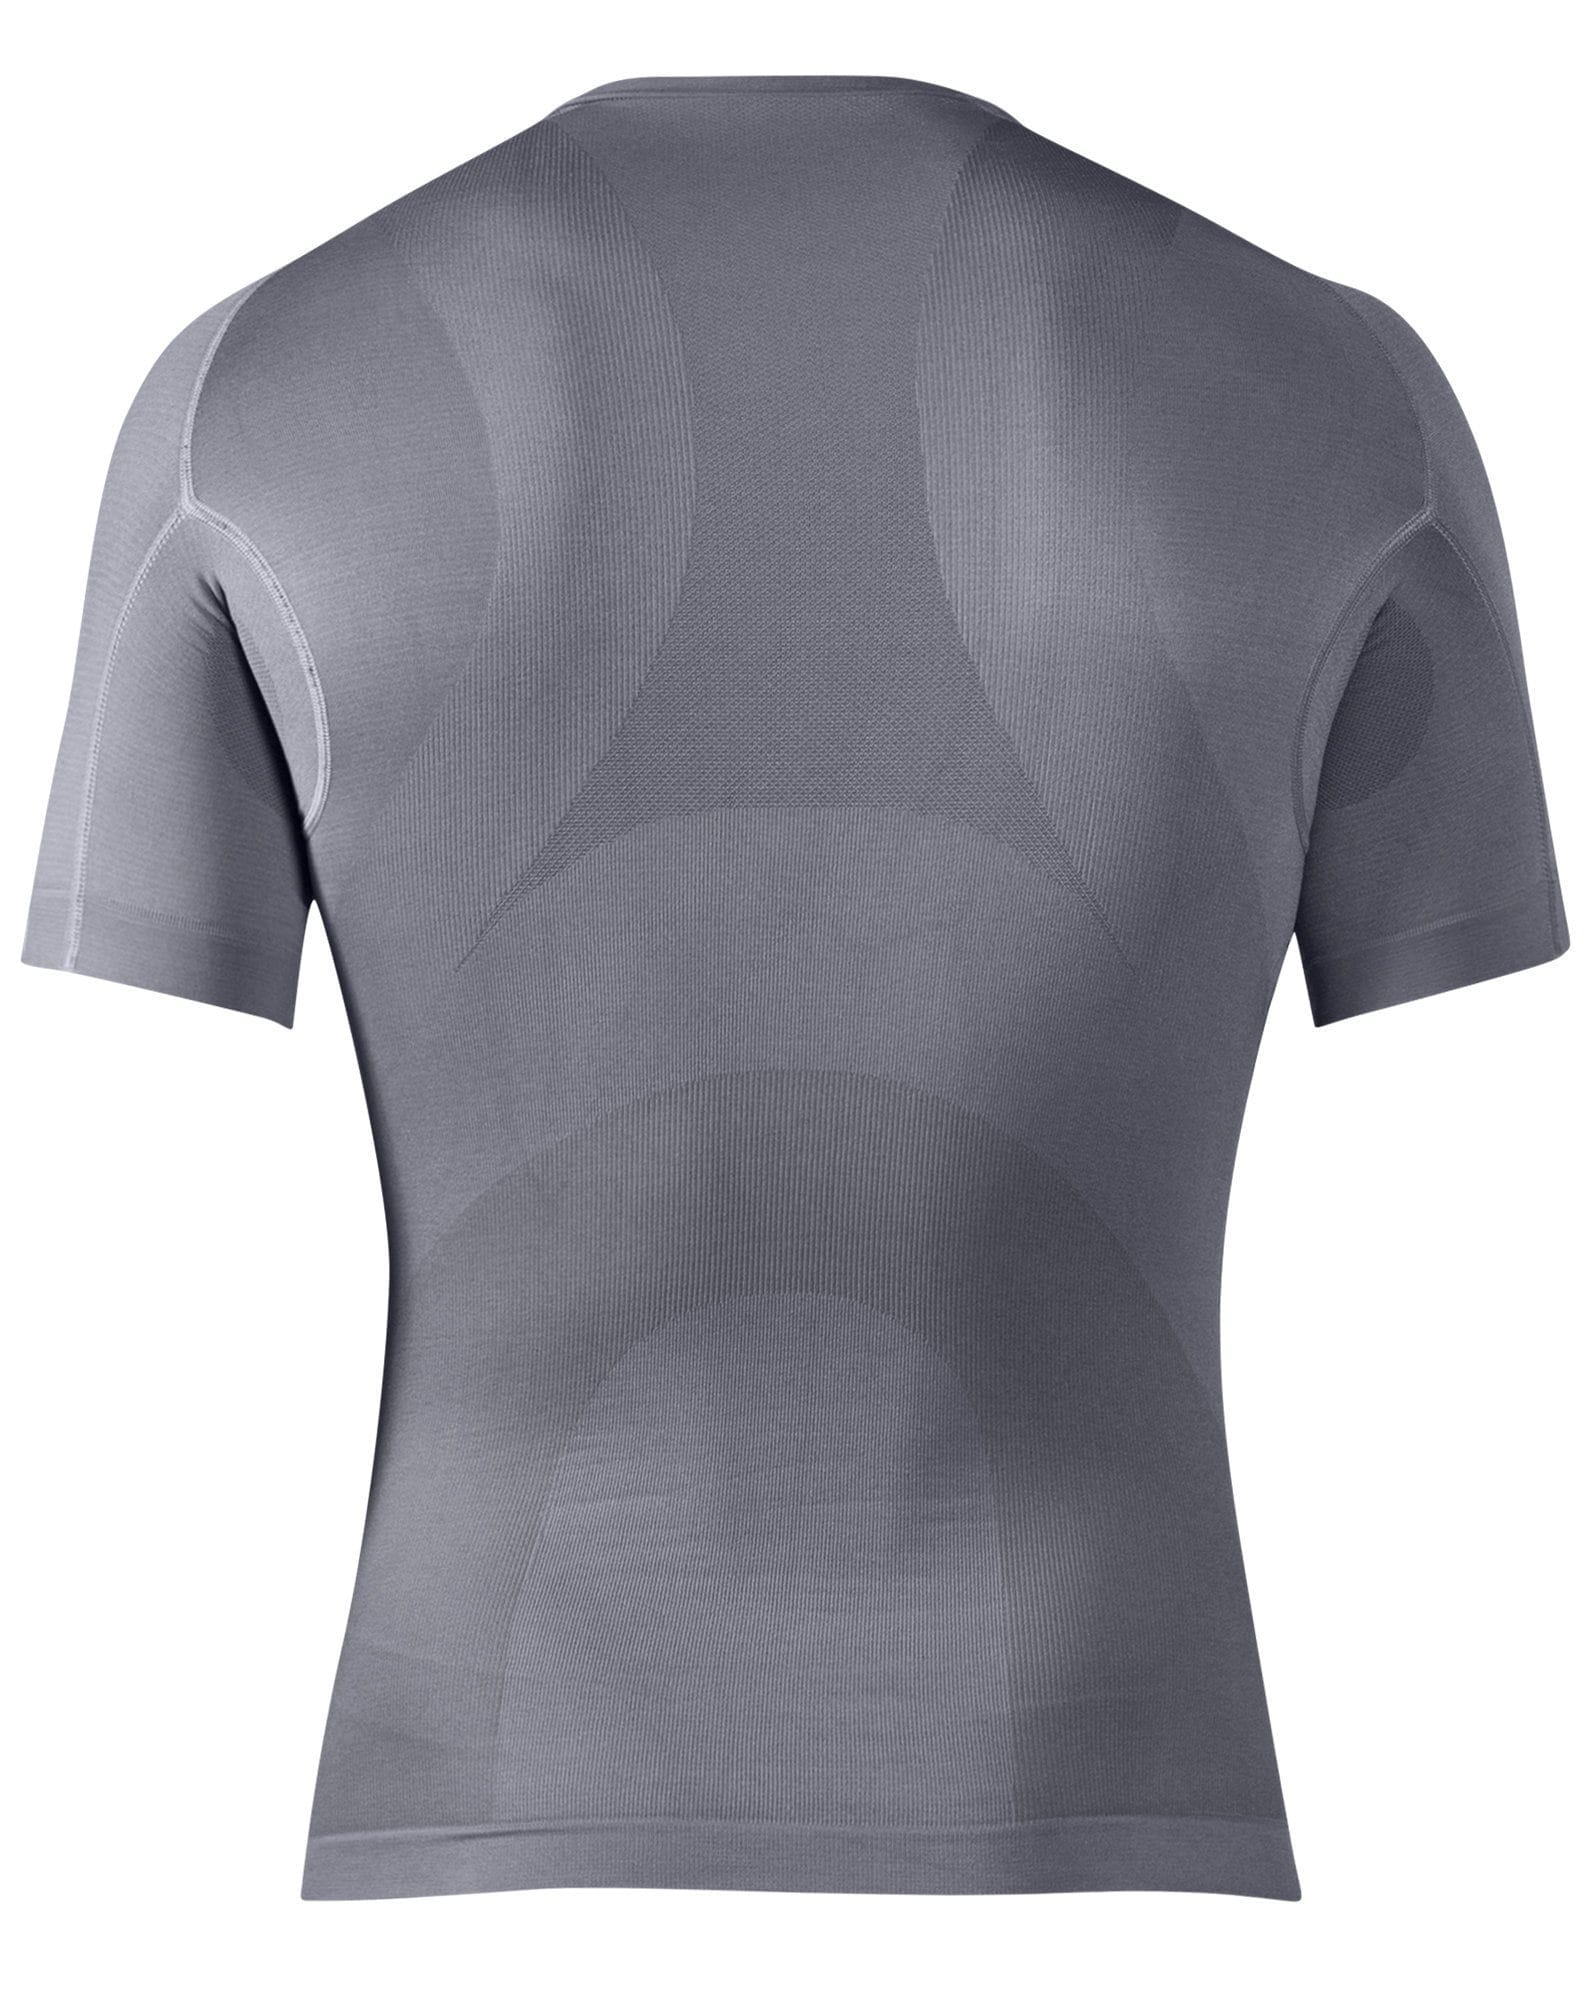 https://www.knapman.fr/product/73-e2g-knapman-mens-compression-shirt-v-neck-grey.jpg